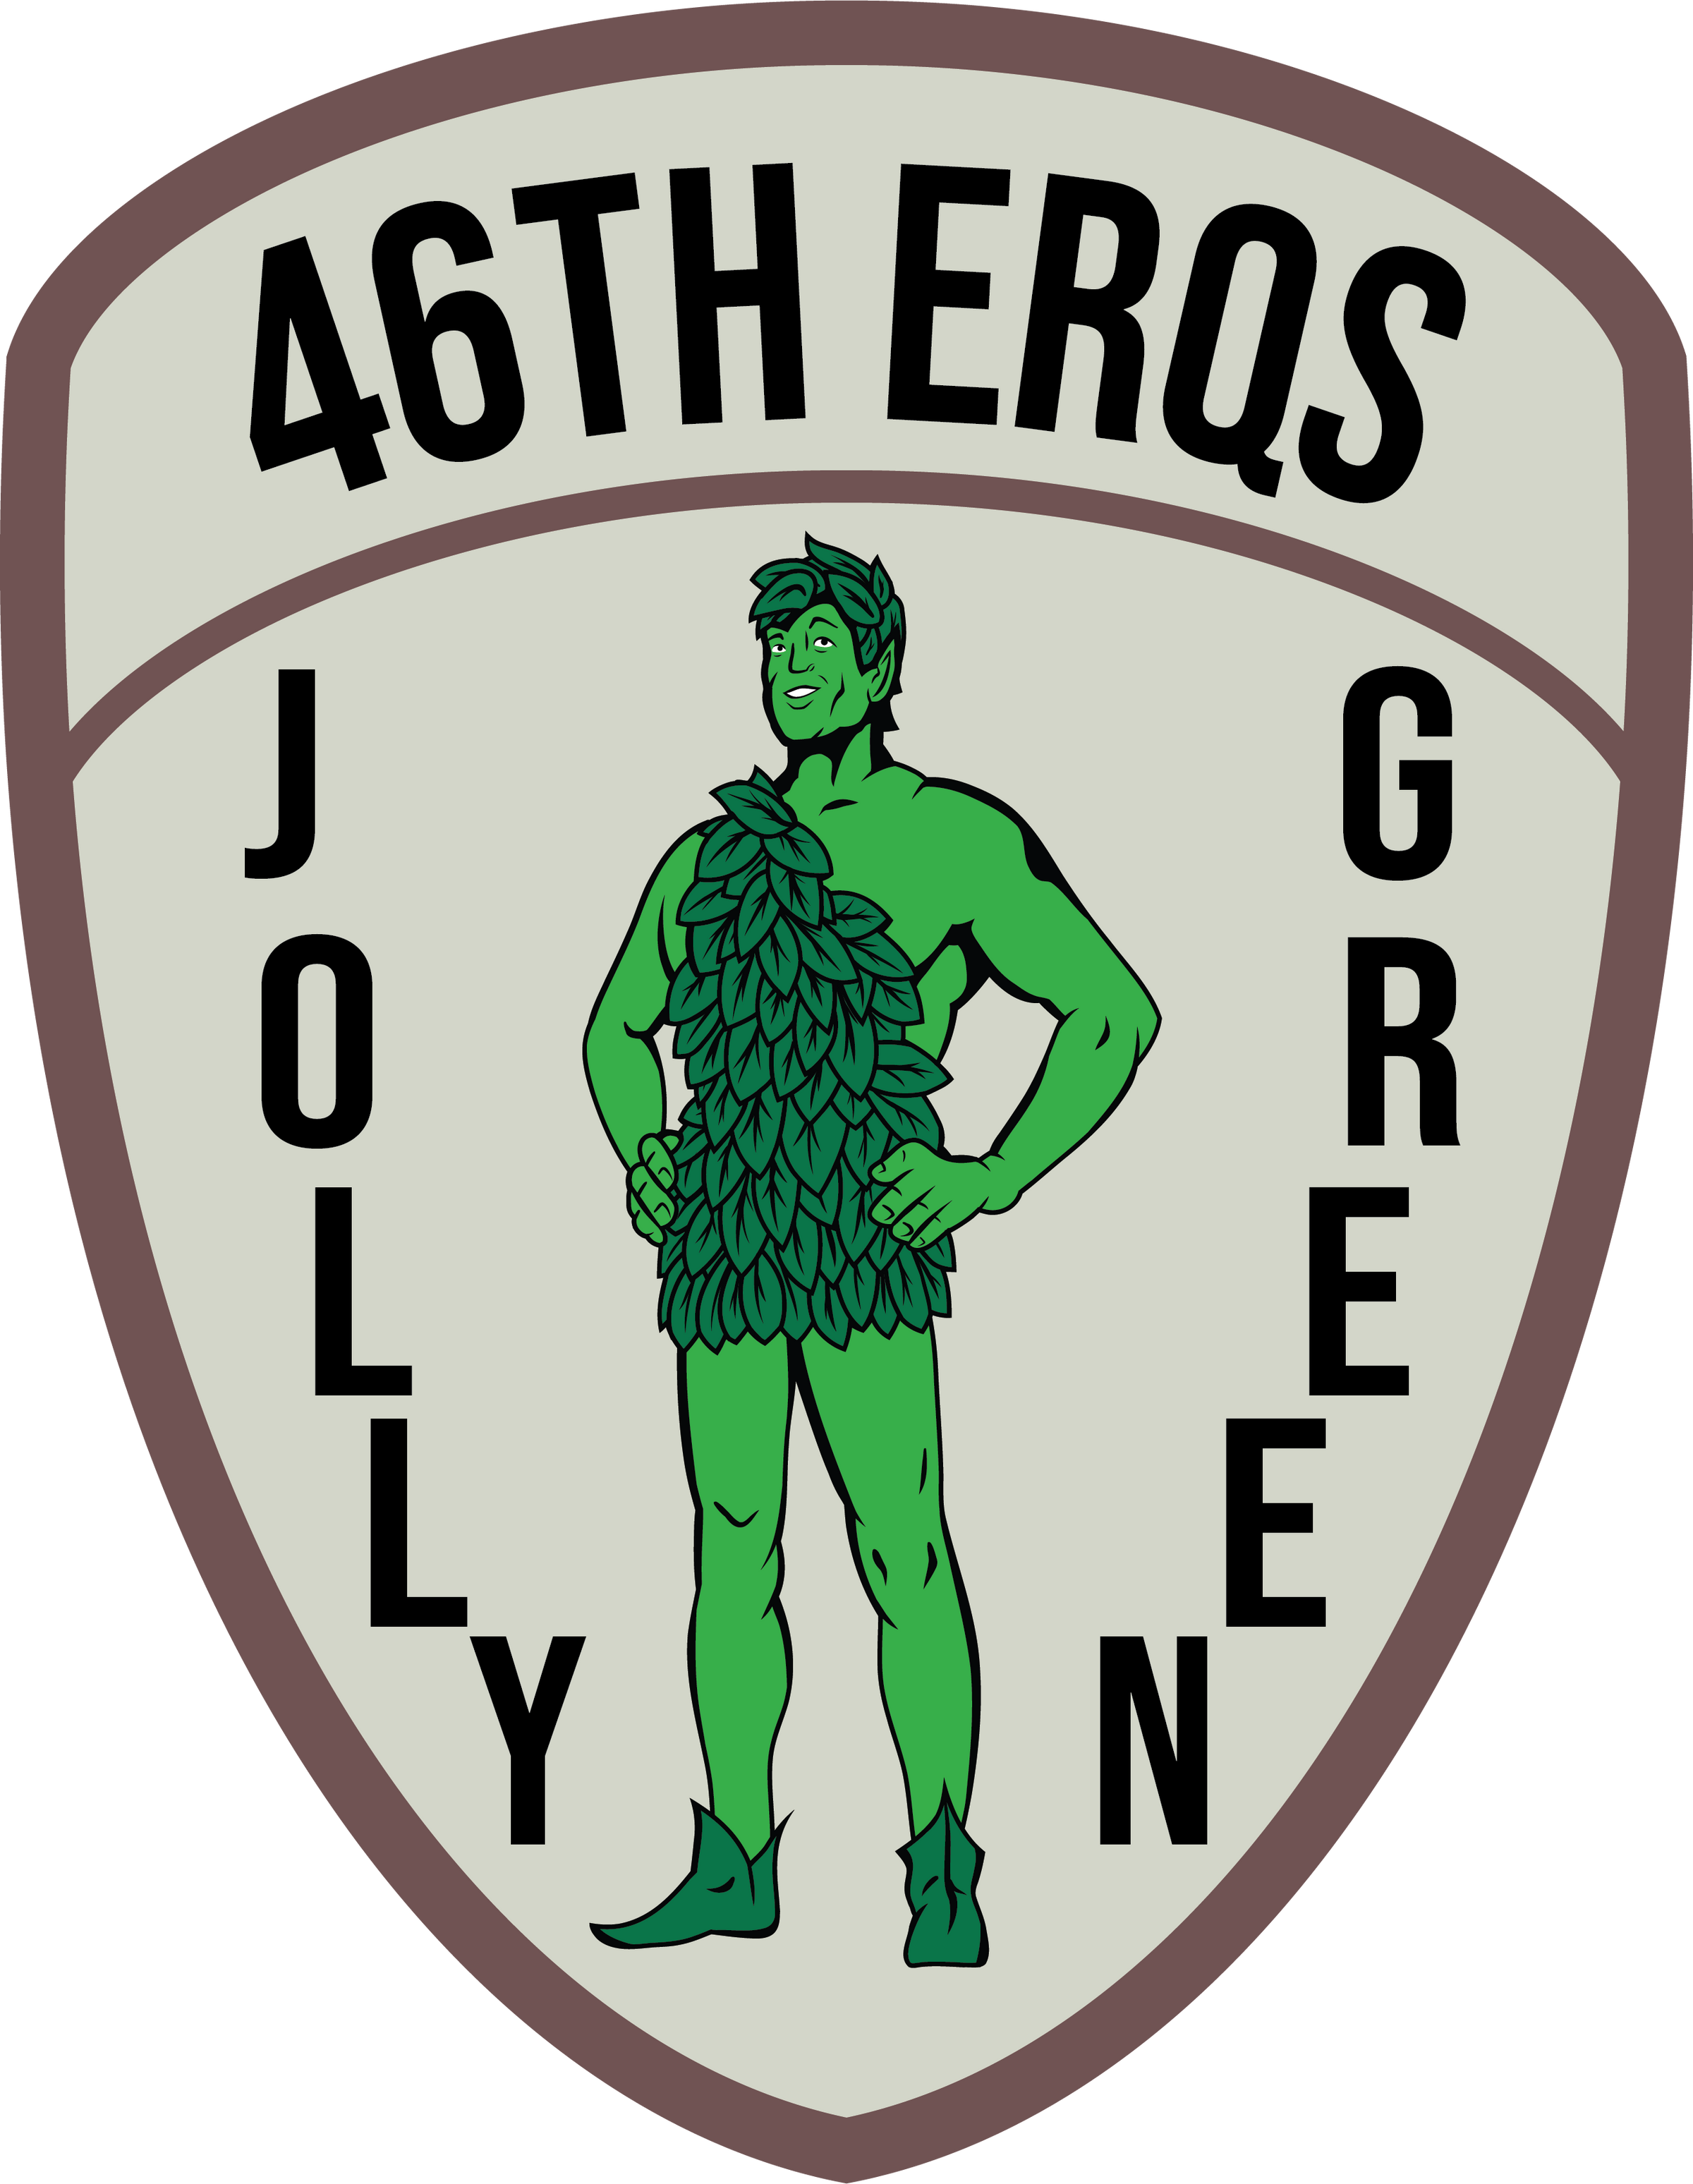 46th ERQS "Jolly Green"